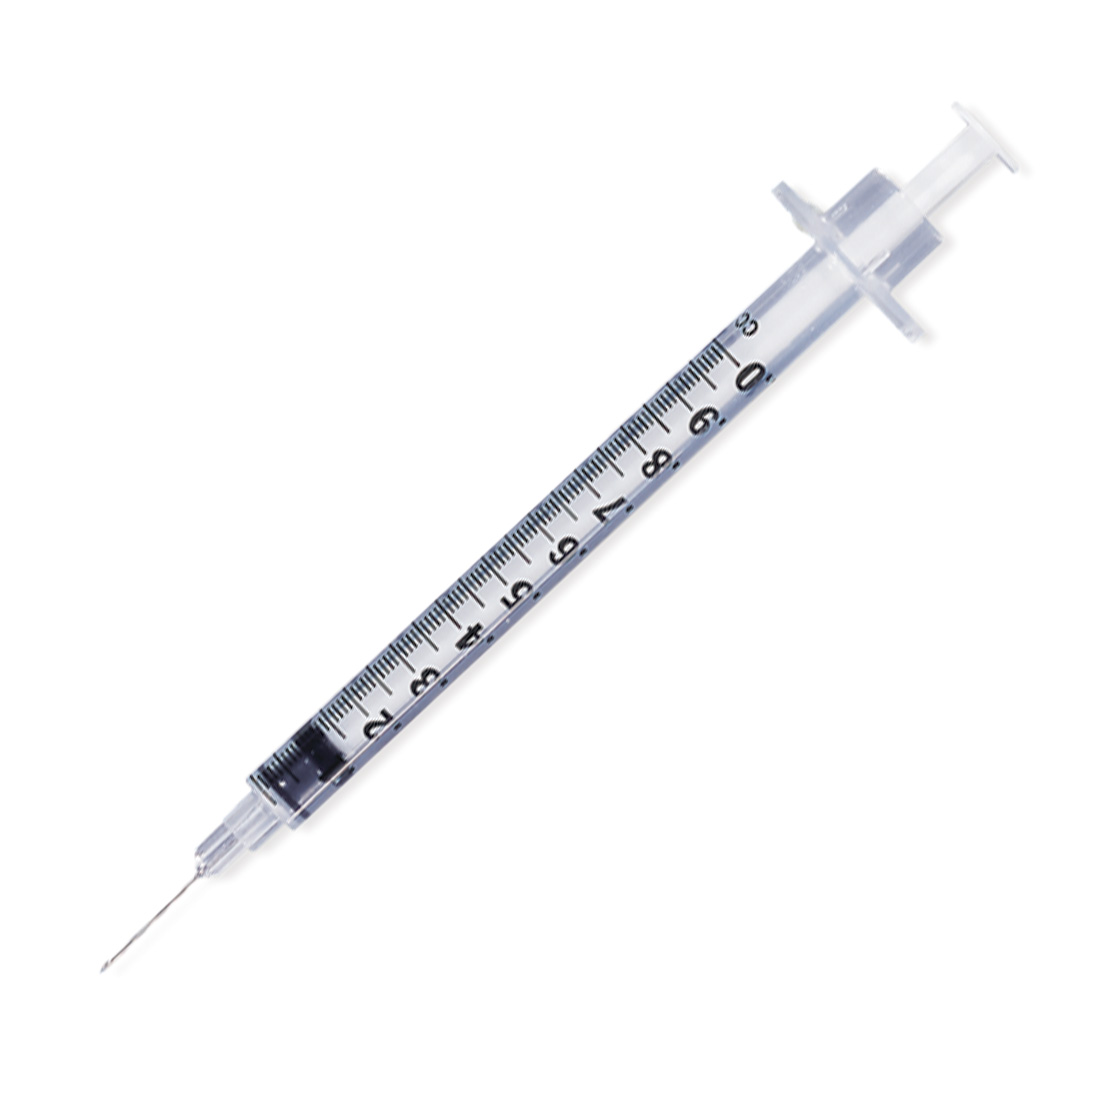 1 cc Allergy Syringe w/28ga x 1/2" Permanently Attached Needle - 100/Box